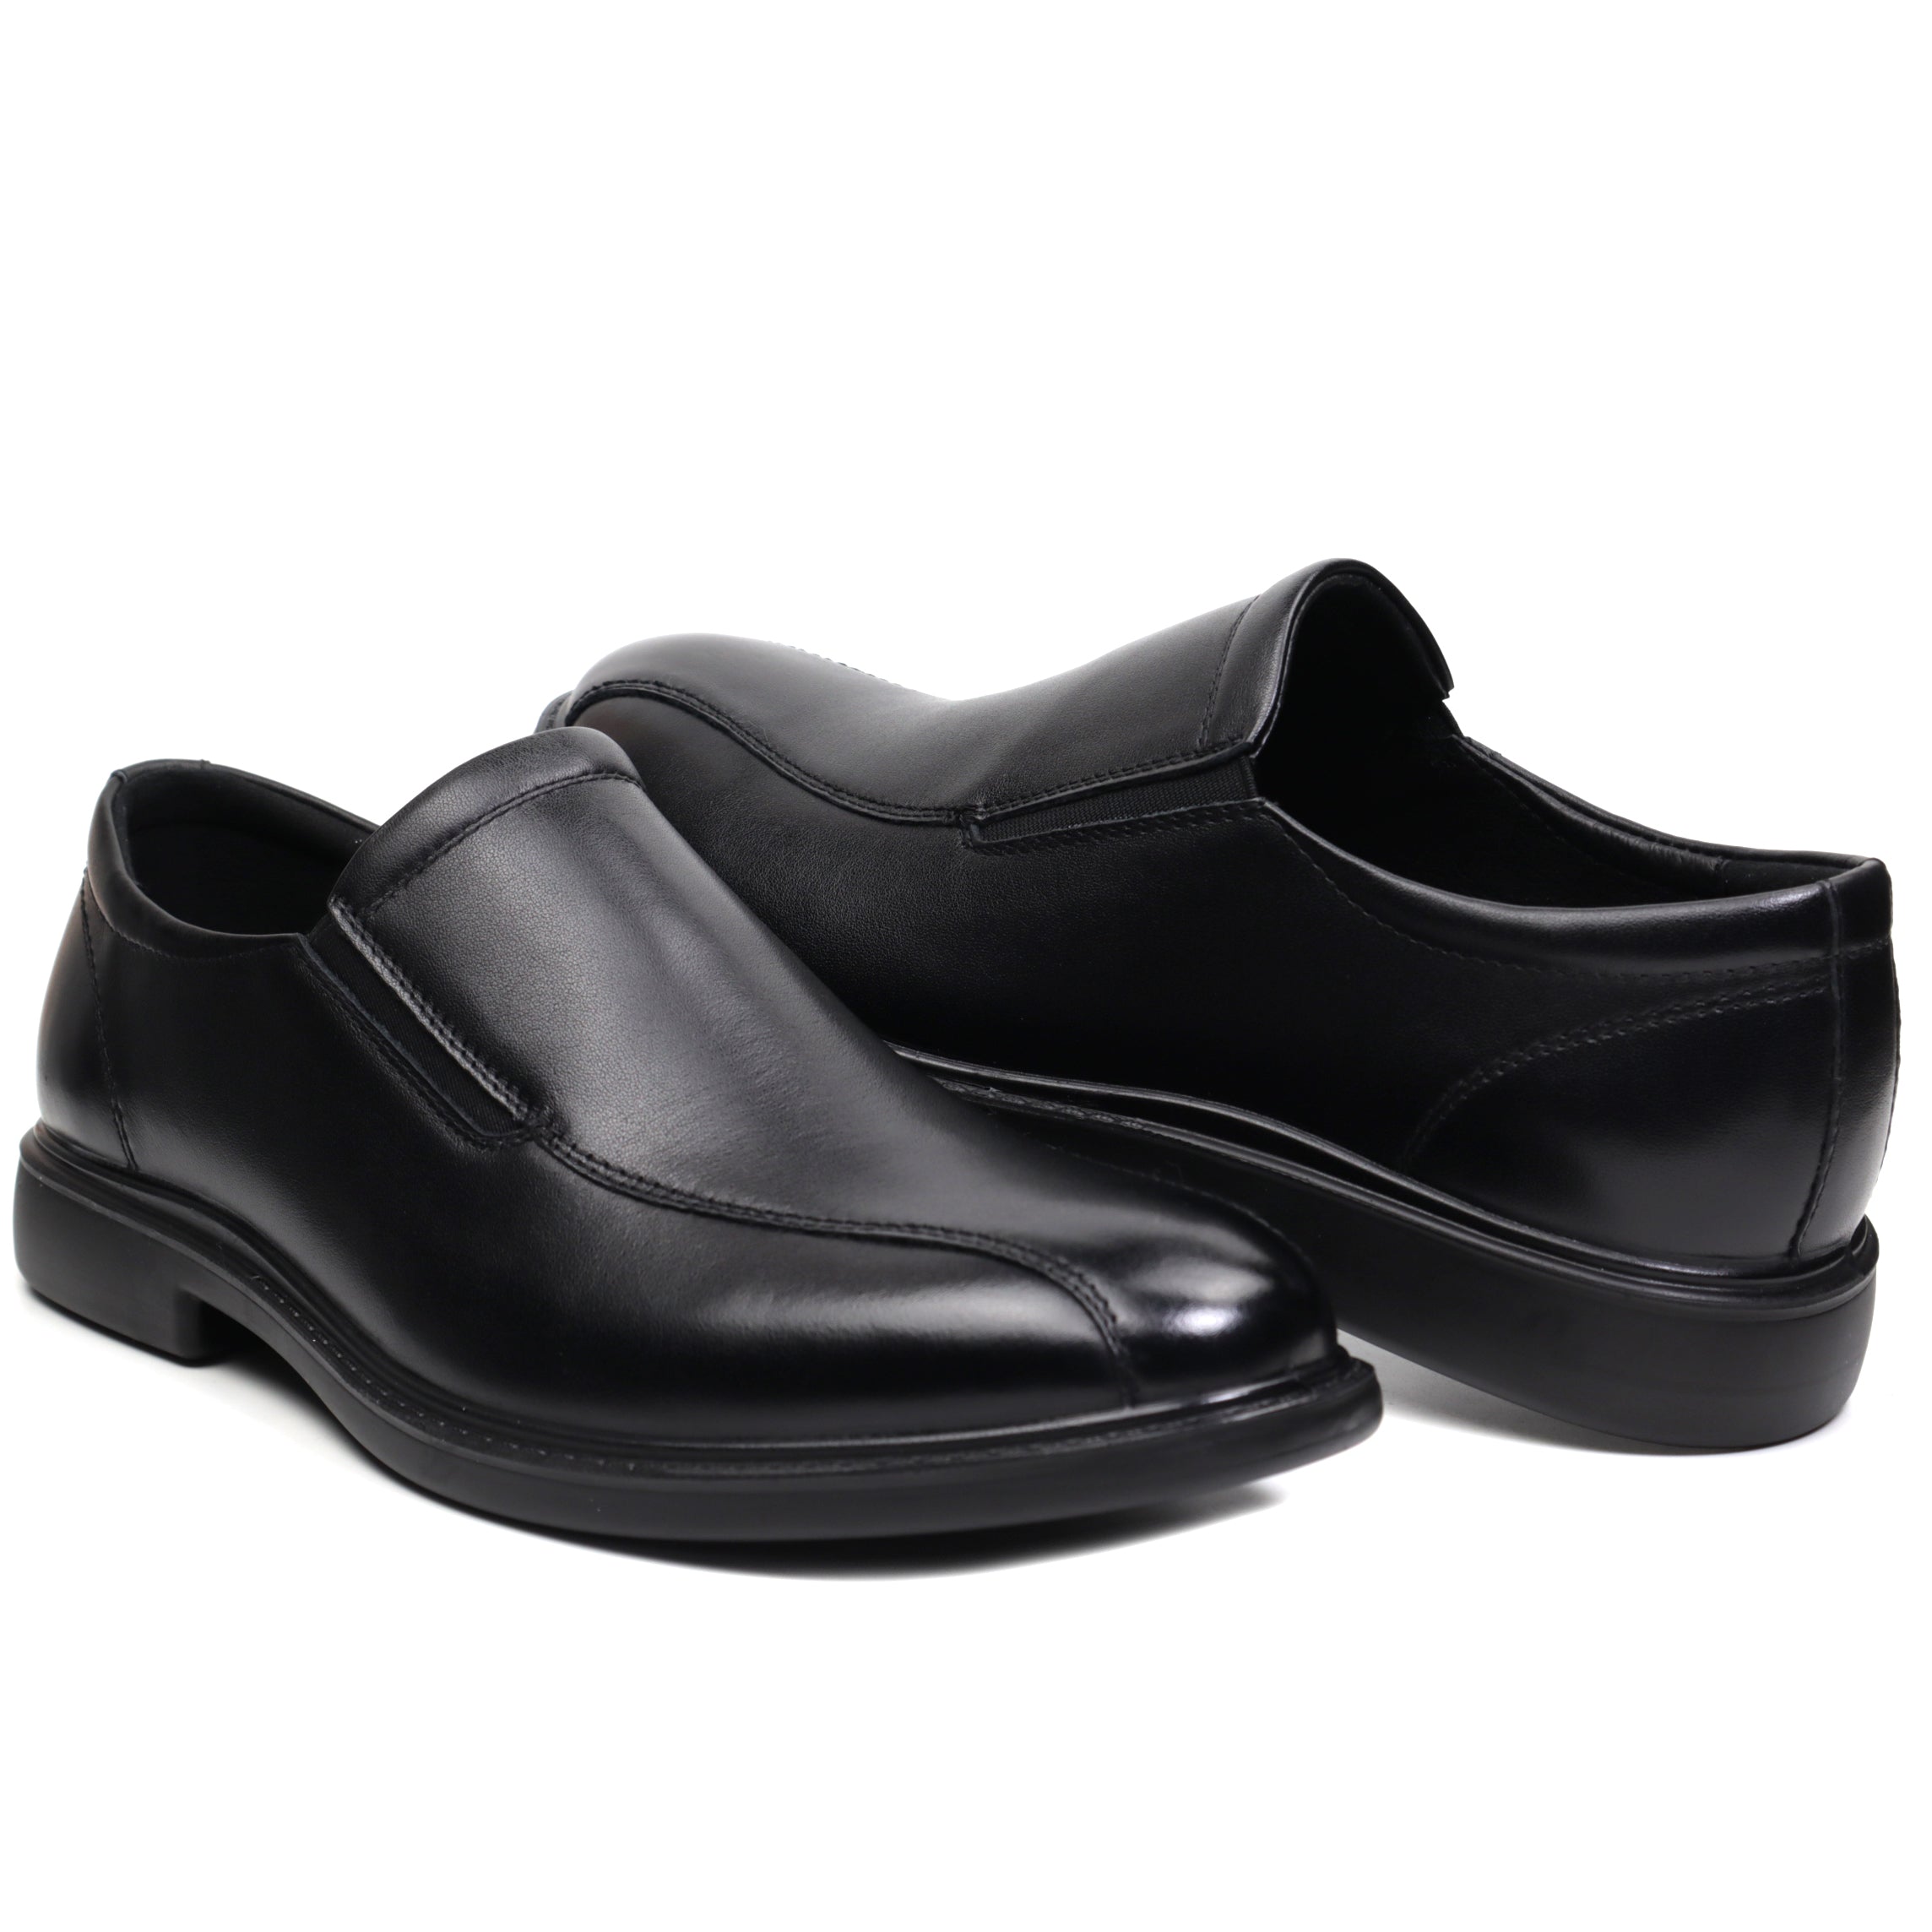 Pantofi barbati MARIMI MARI 7D1212 D negru IB2450-NG